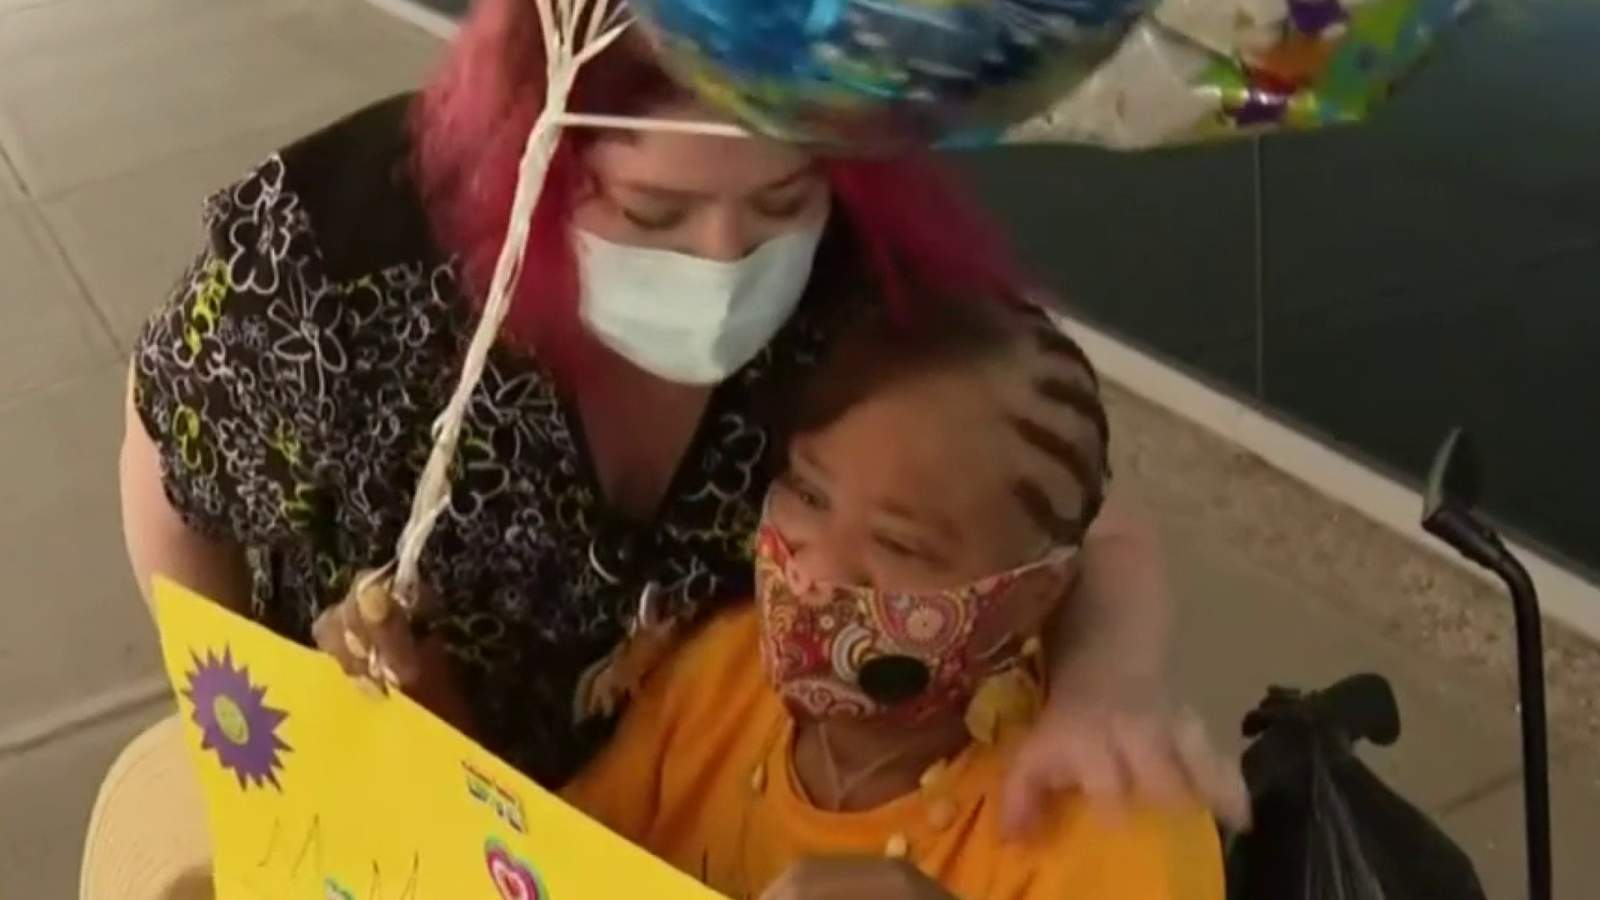 Coronavirus (COVID-19) survivor heads home after 73 days on ventilator in Detroit hospital